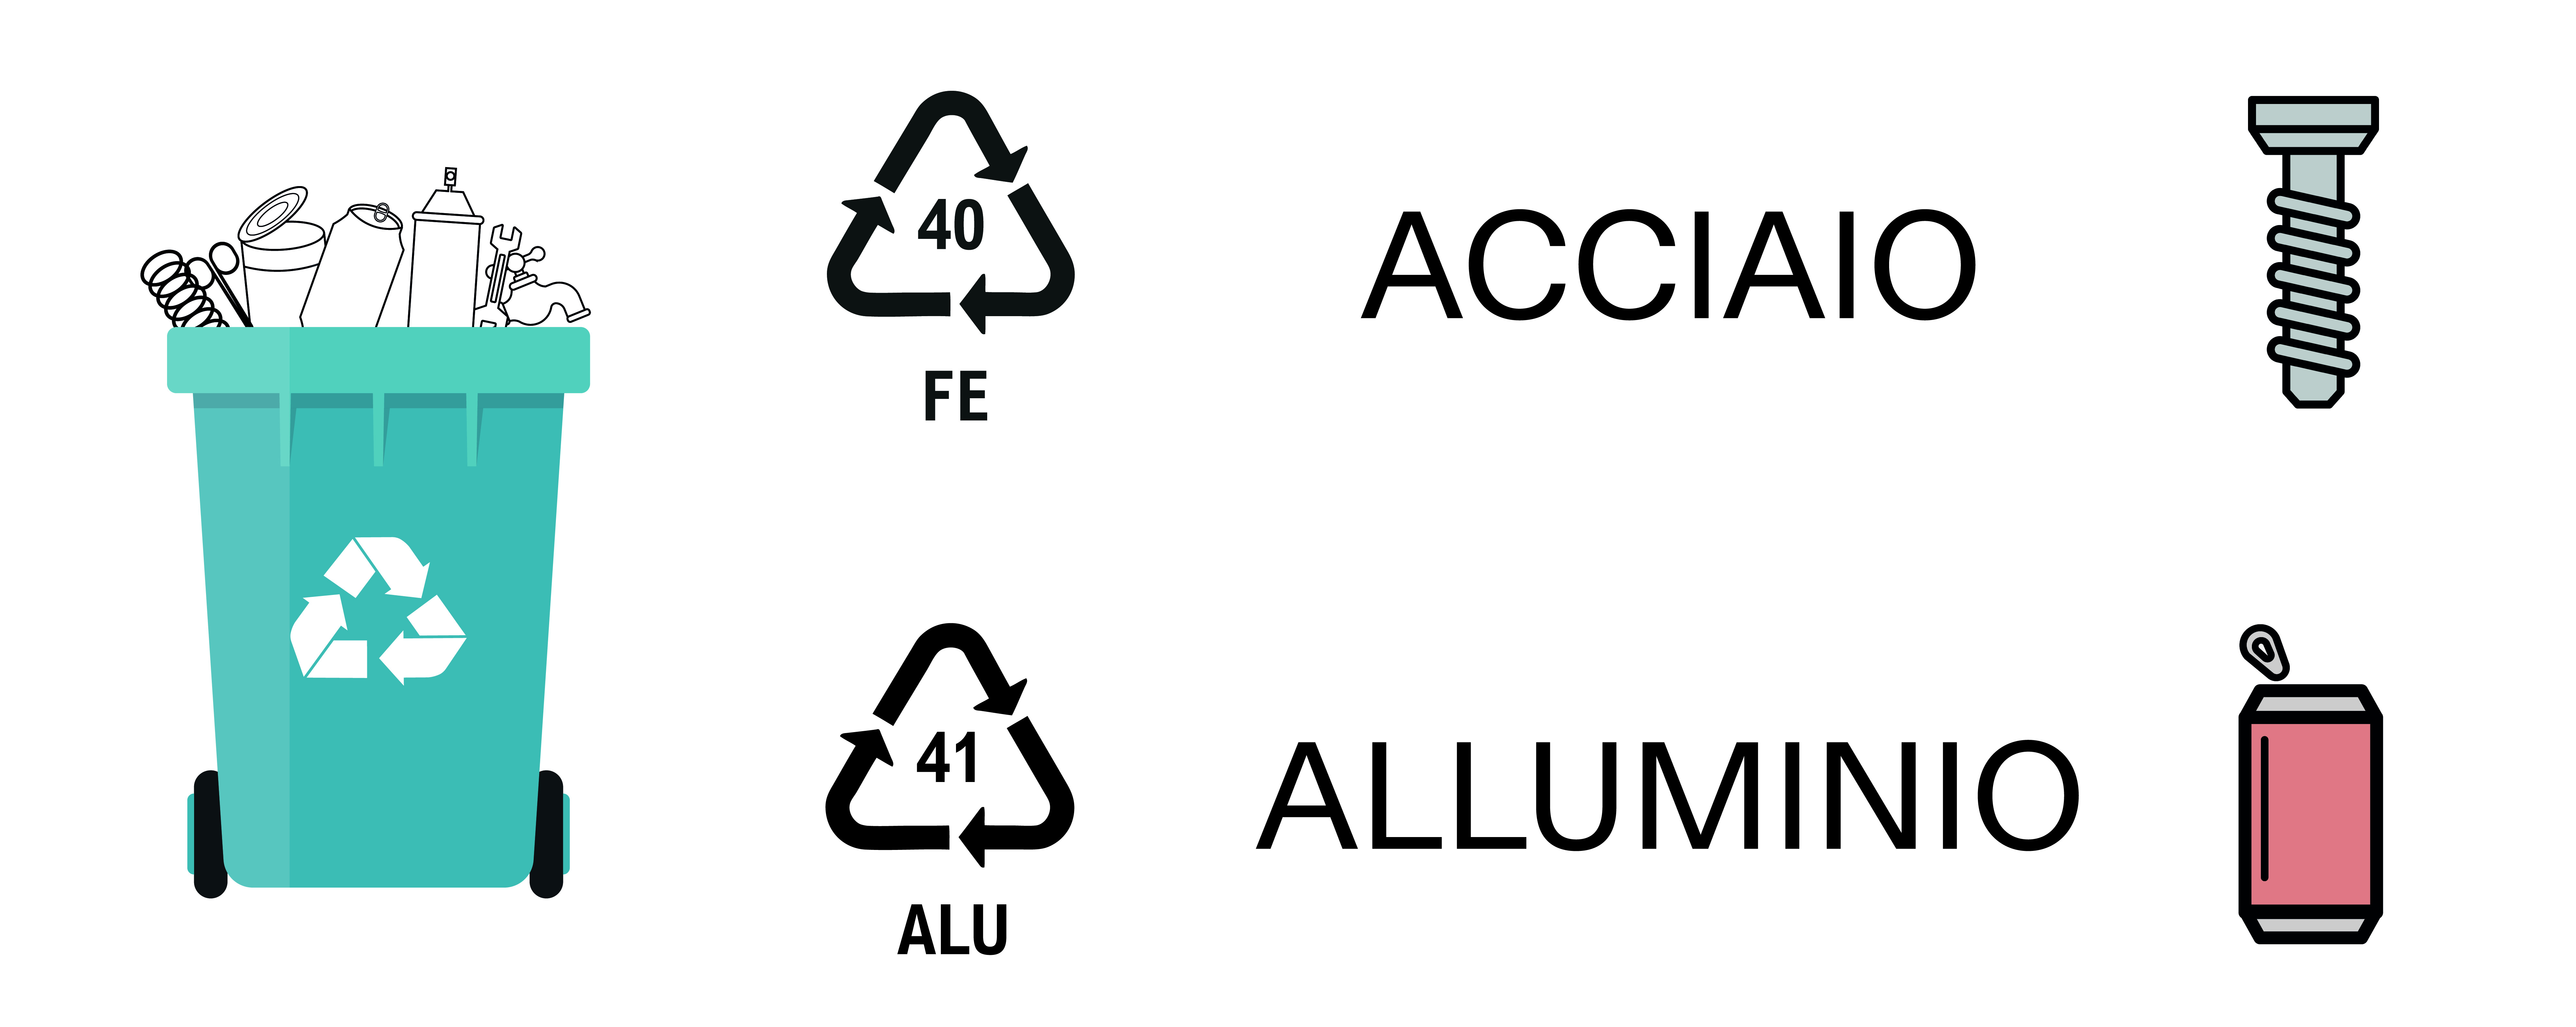 ALLUMINIO_aluminio-acciaio.jpg